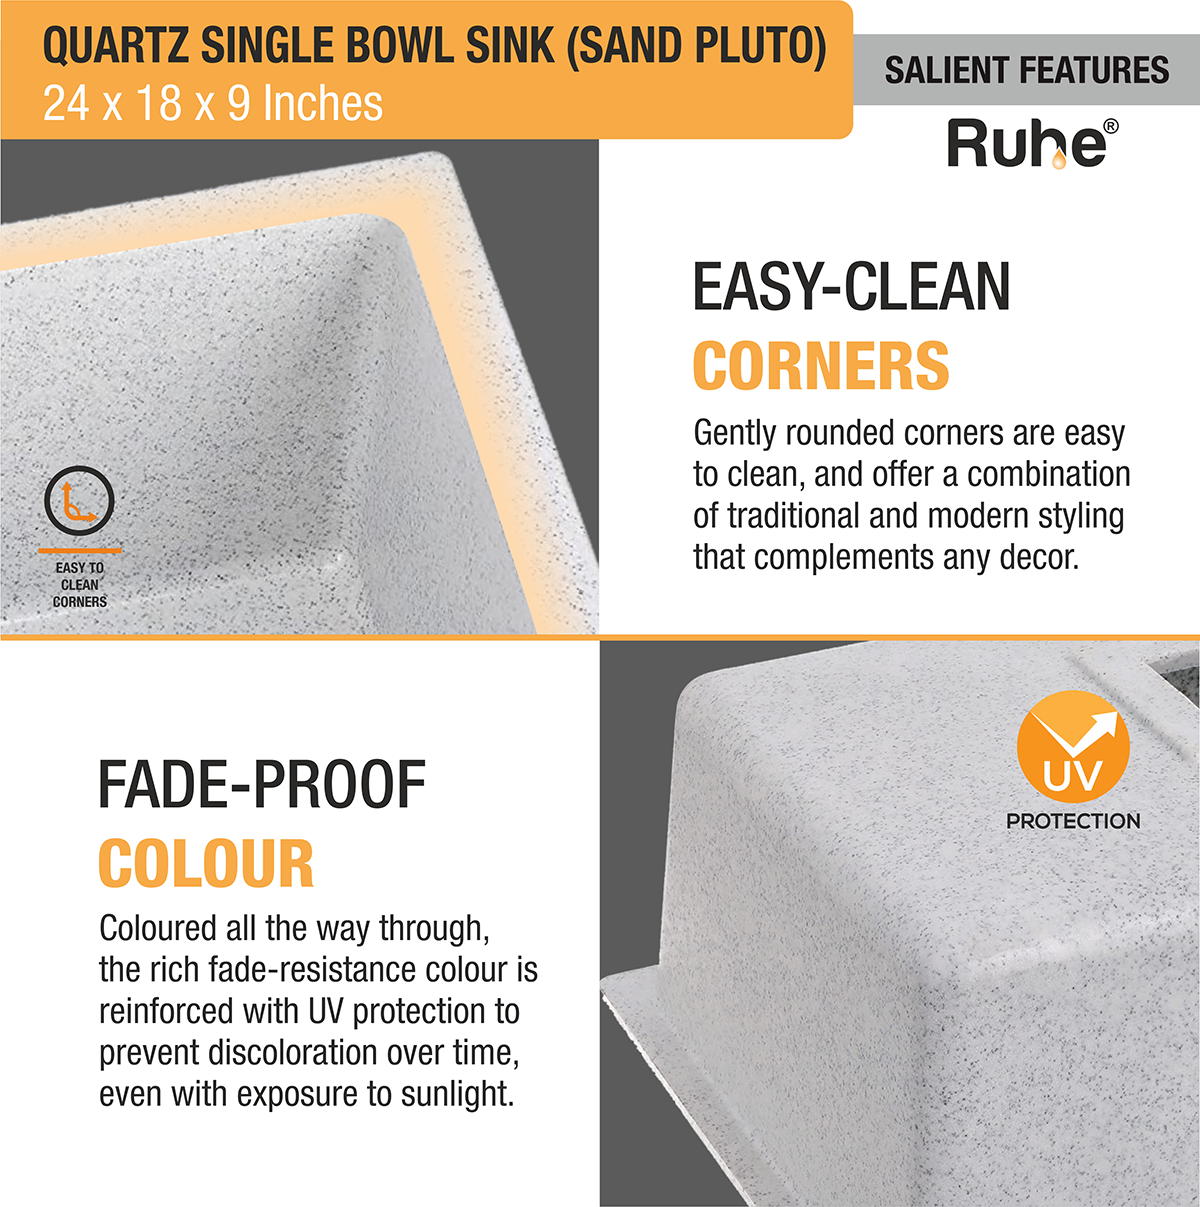 Quartz Sand Pluto Single Bowl Kitchen Sink (24 x 18 x 9 inches) features